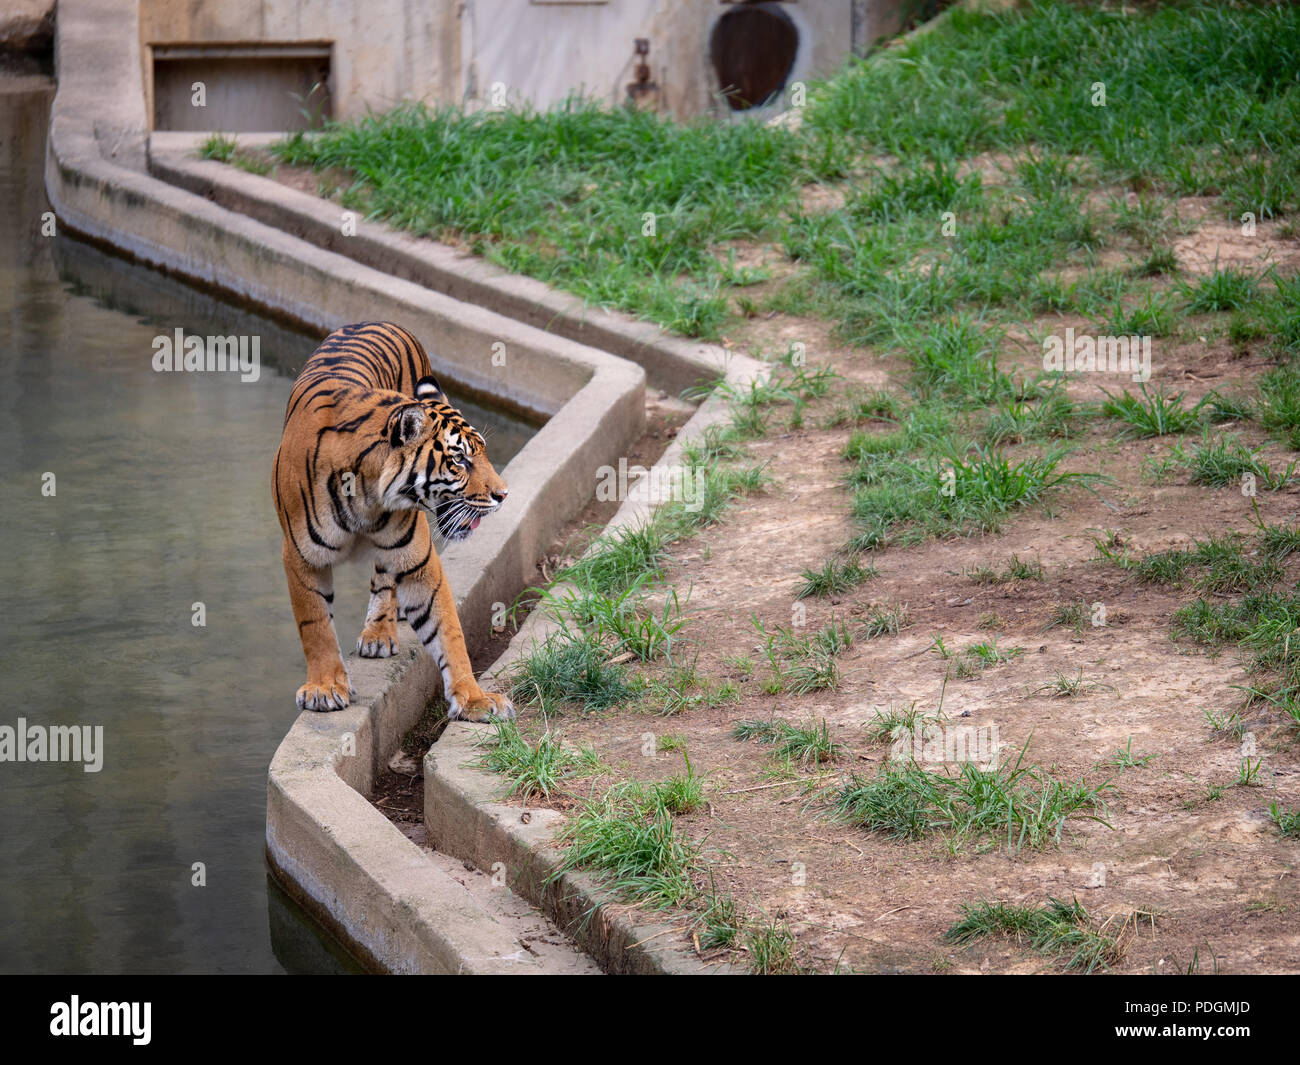 Sumatran tiger Panthera tigris sondaica walks along concrete barrier at a zoo enclosure  Stock Photo